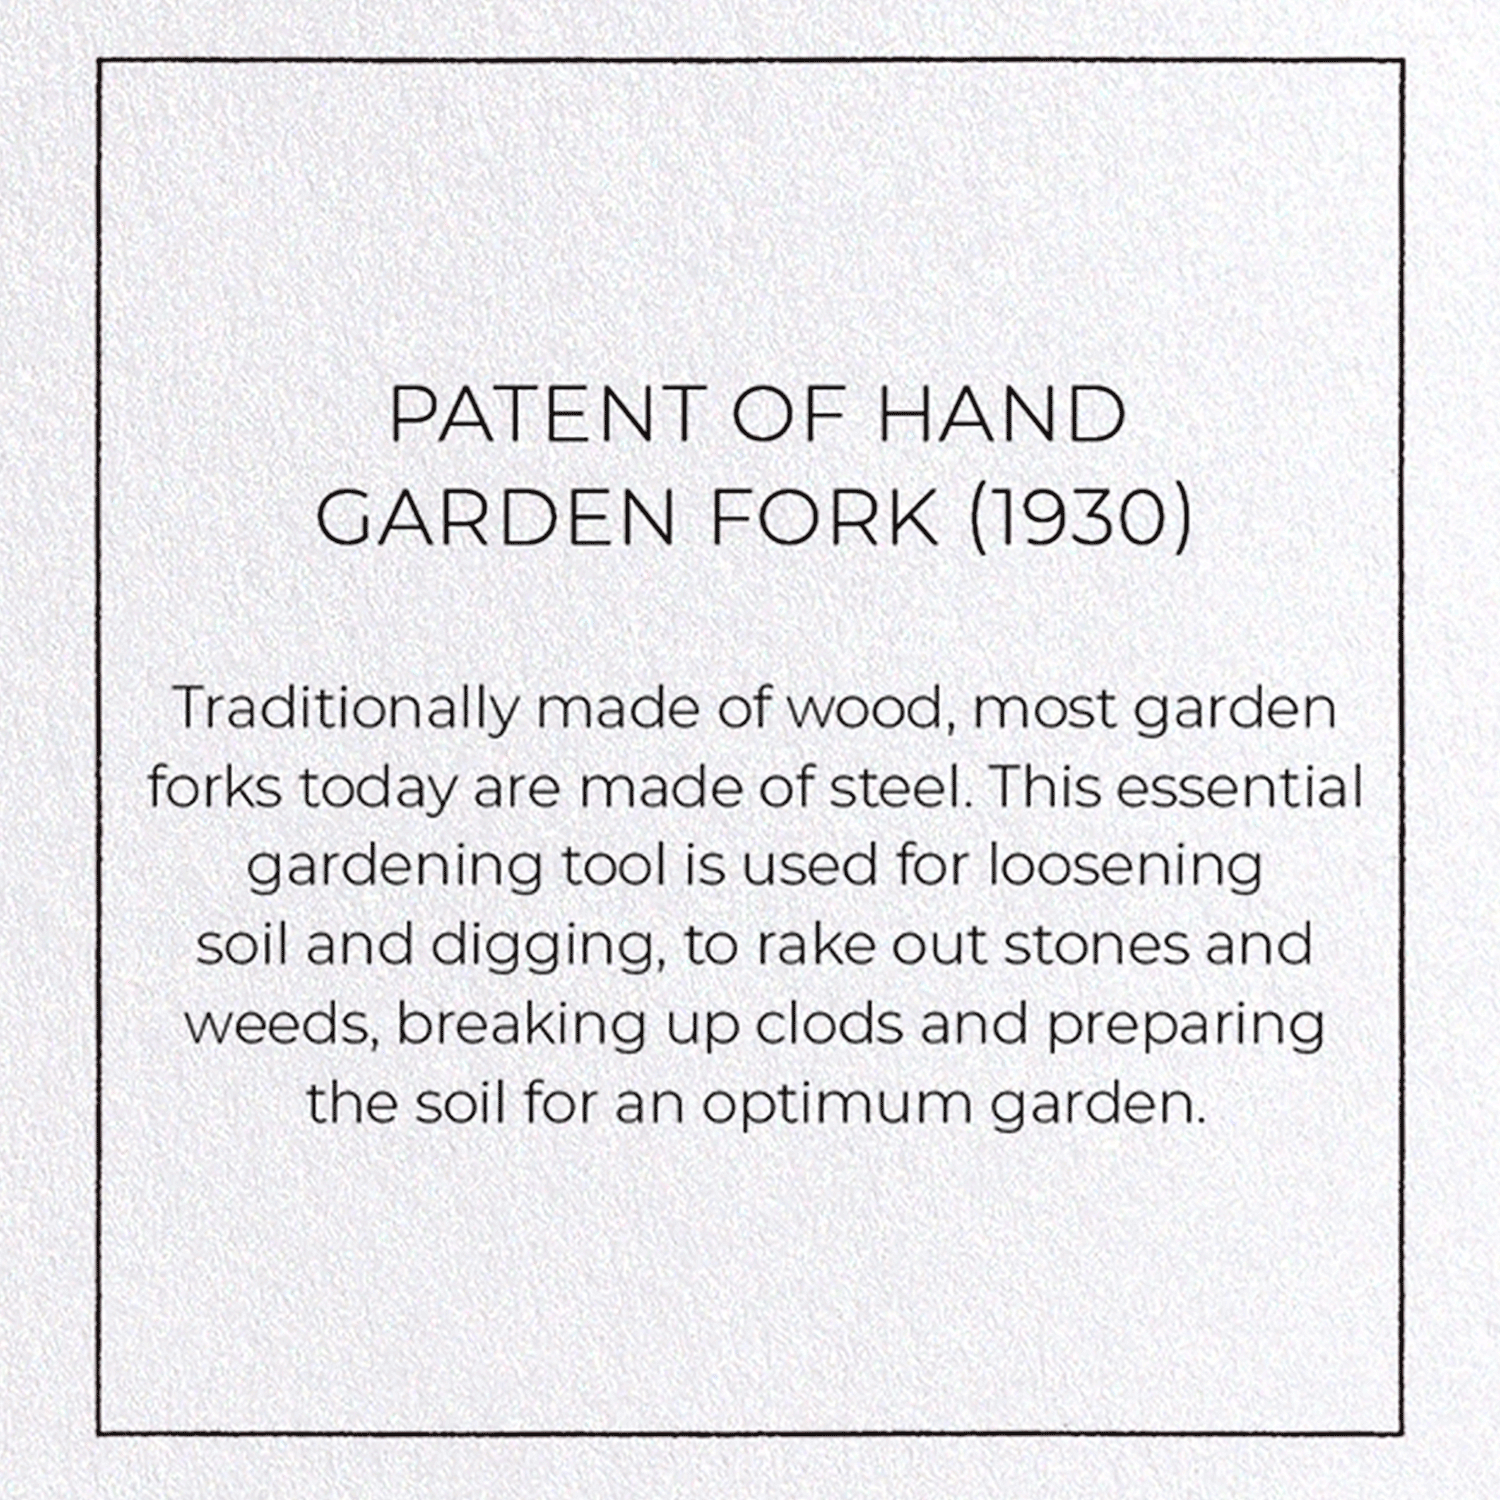 PATENT OF HAND GARDEN FORK (1930)